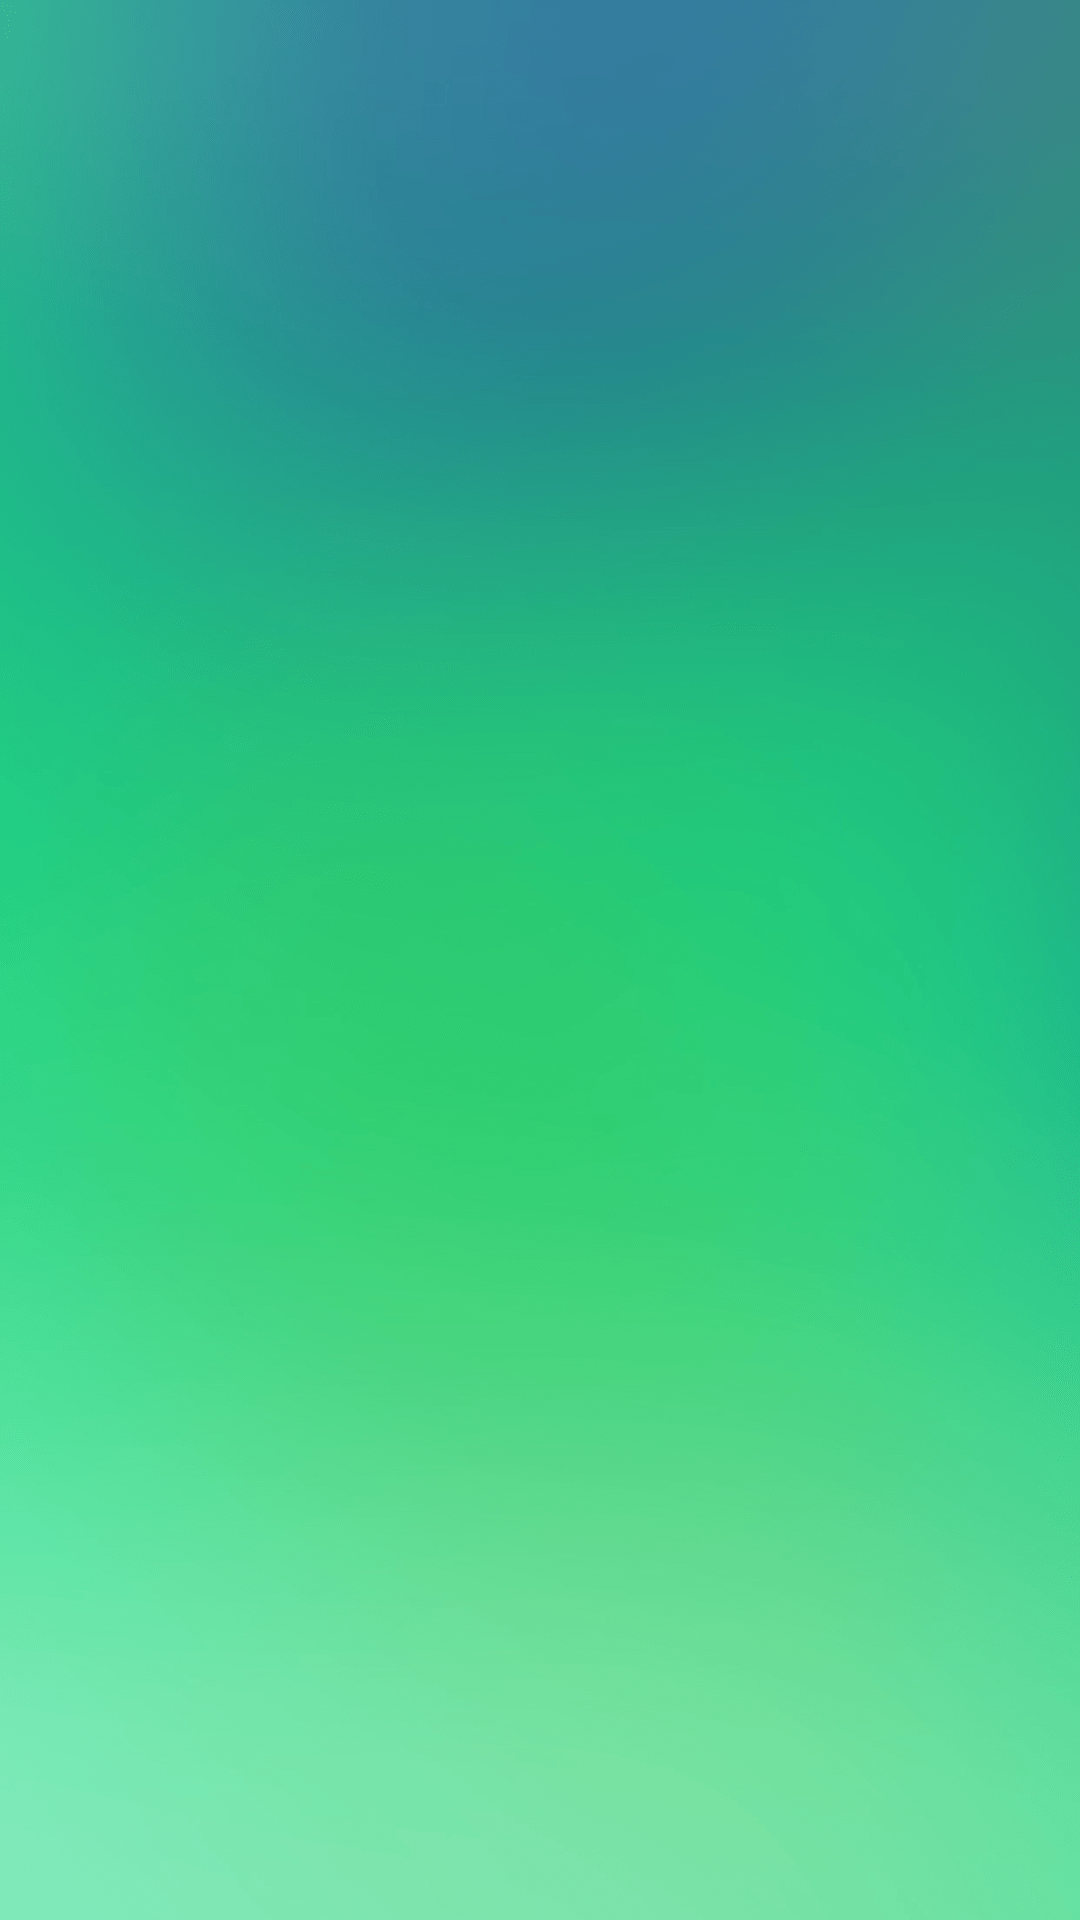 Light Green Iphone Wallpapers Top Free Light Green Iphone Backgrounds Wallpaperaccess